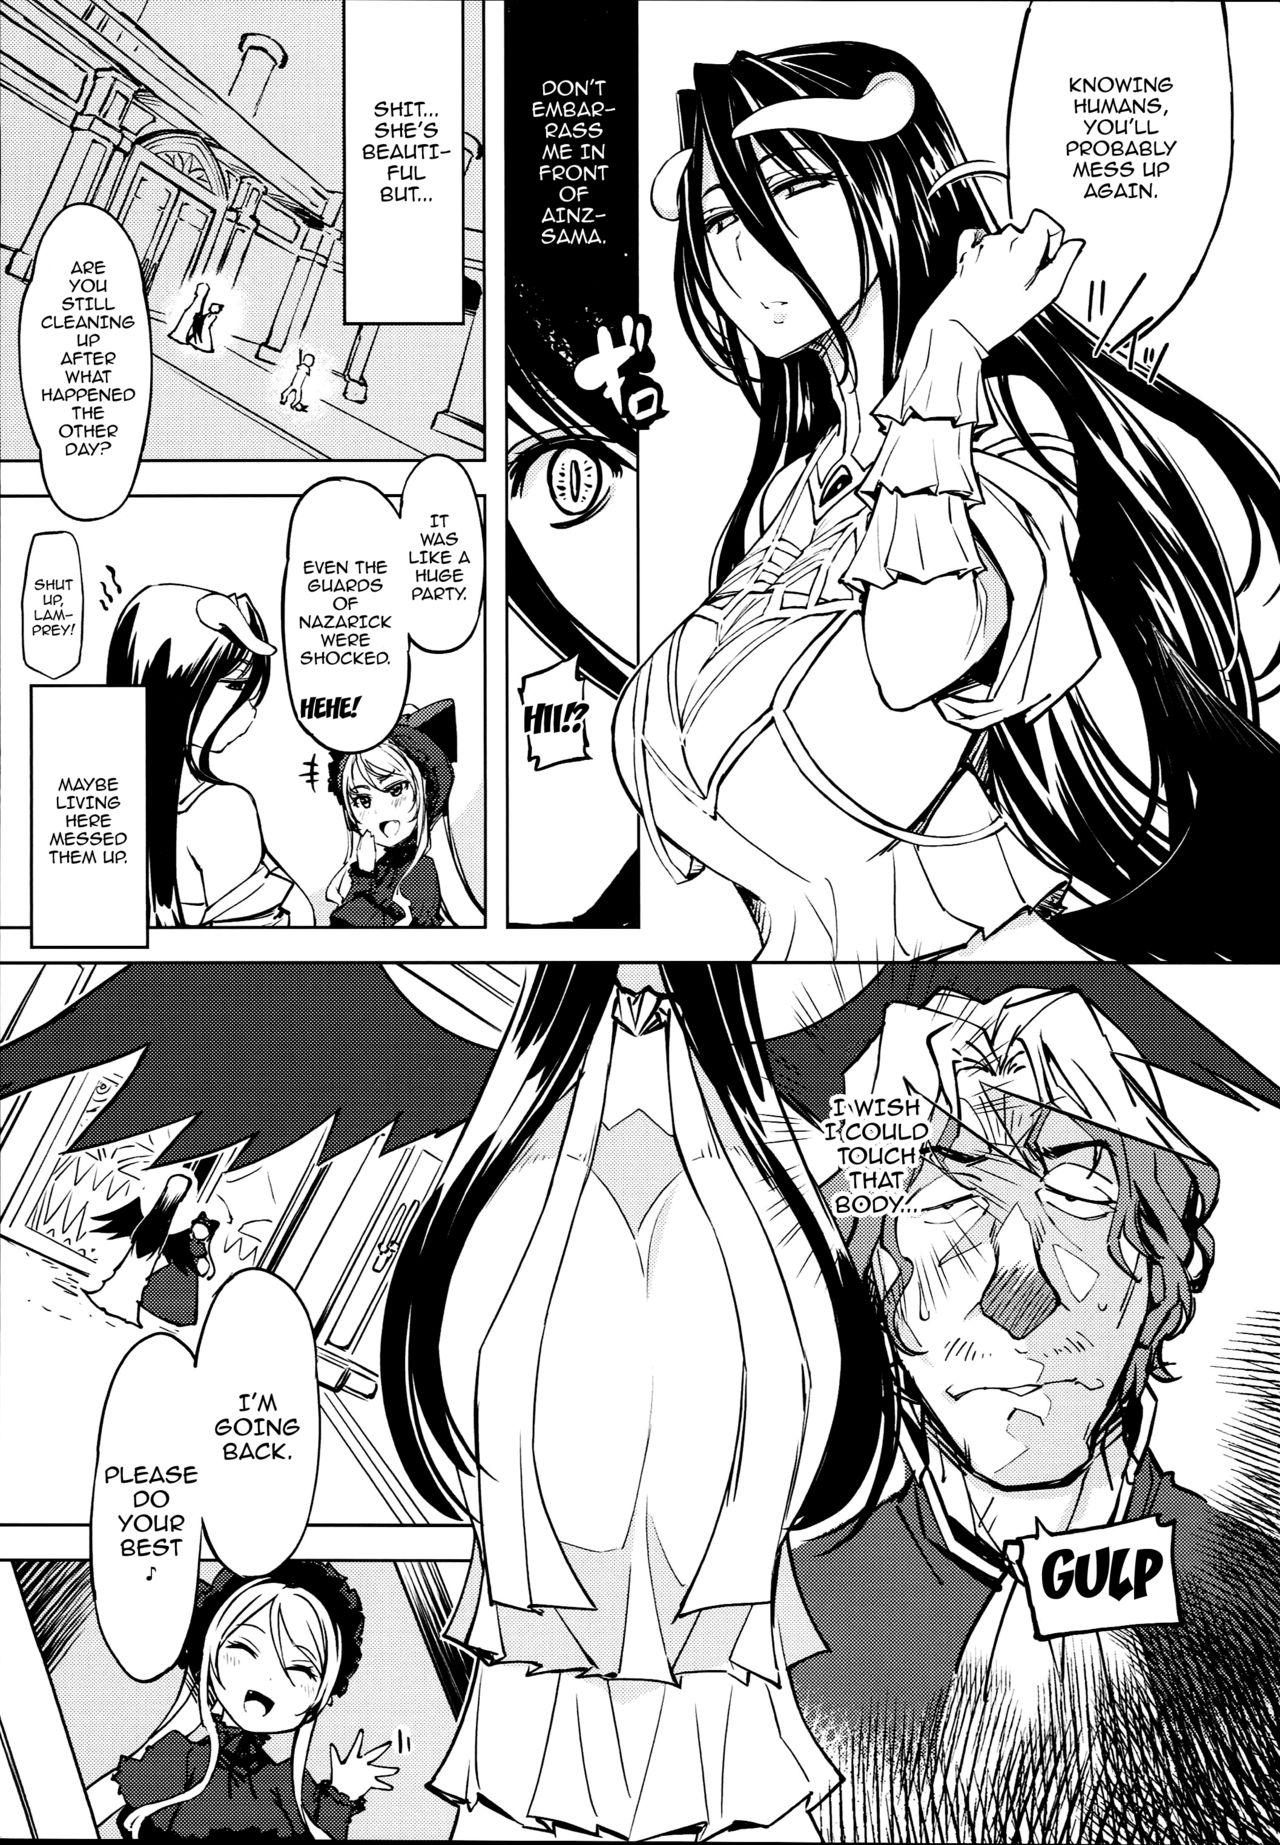 Nurugel Datenniku - Overlord Anime - Page 4